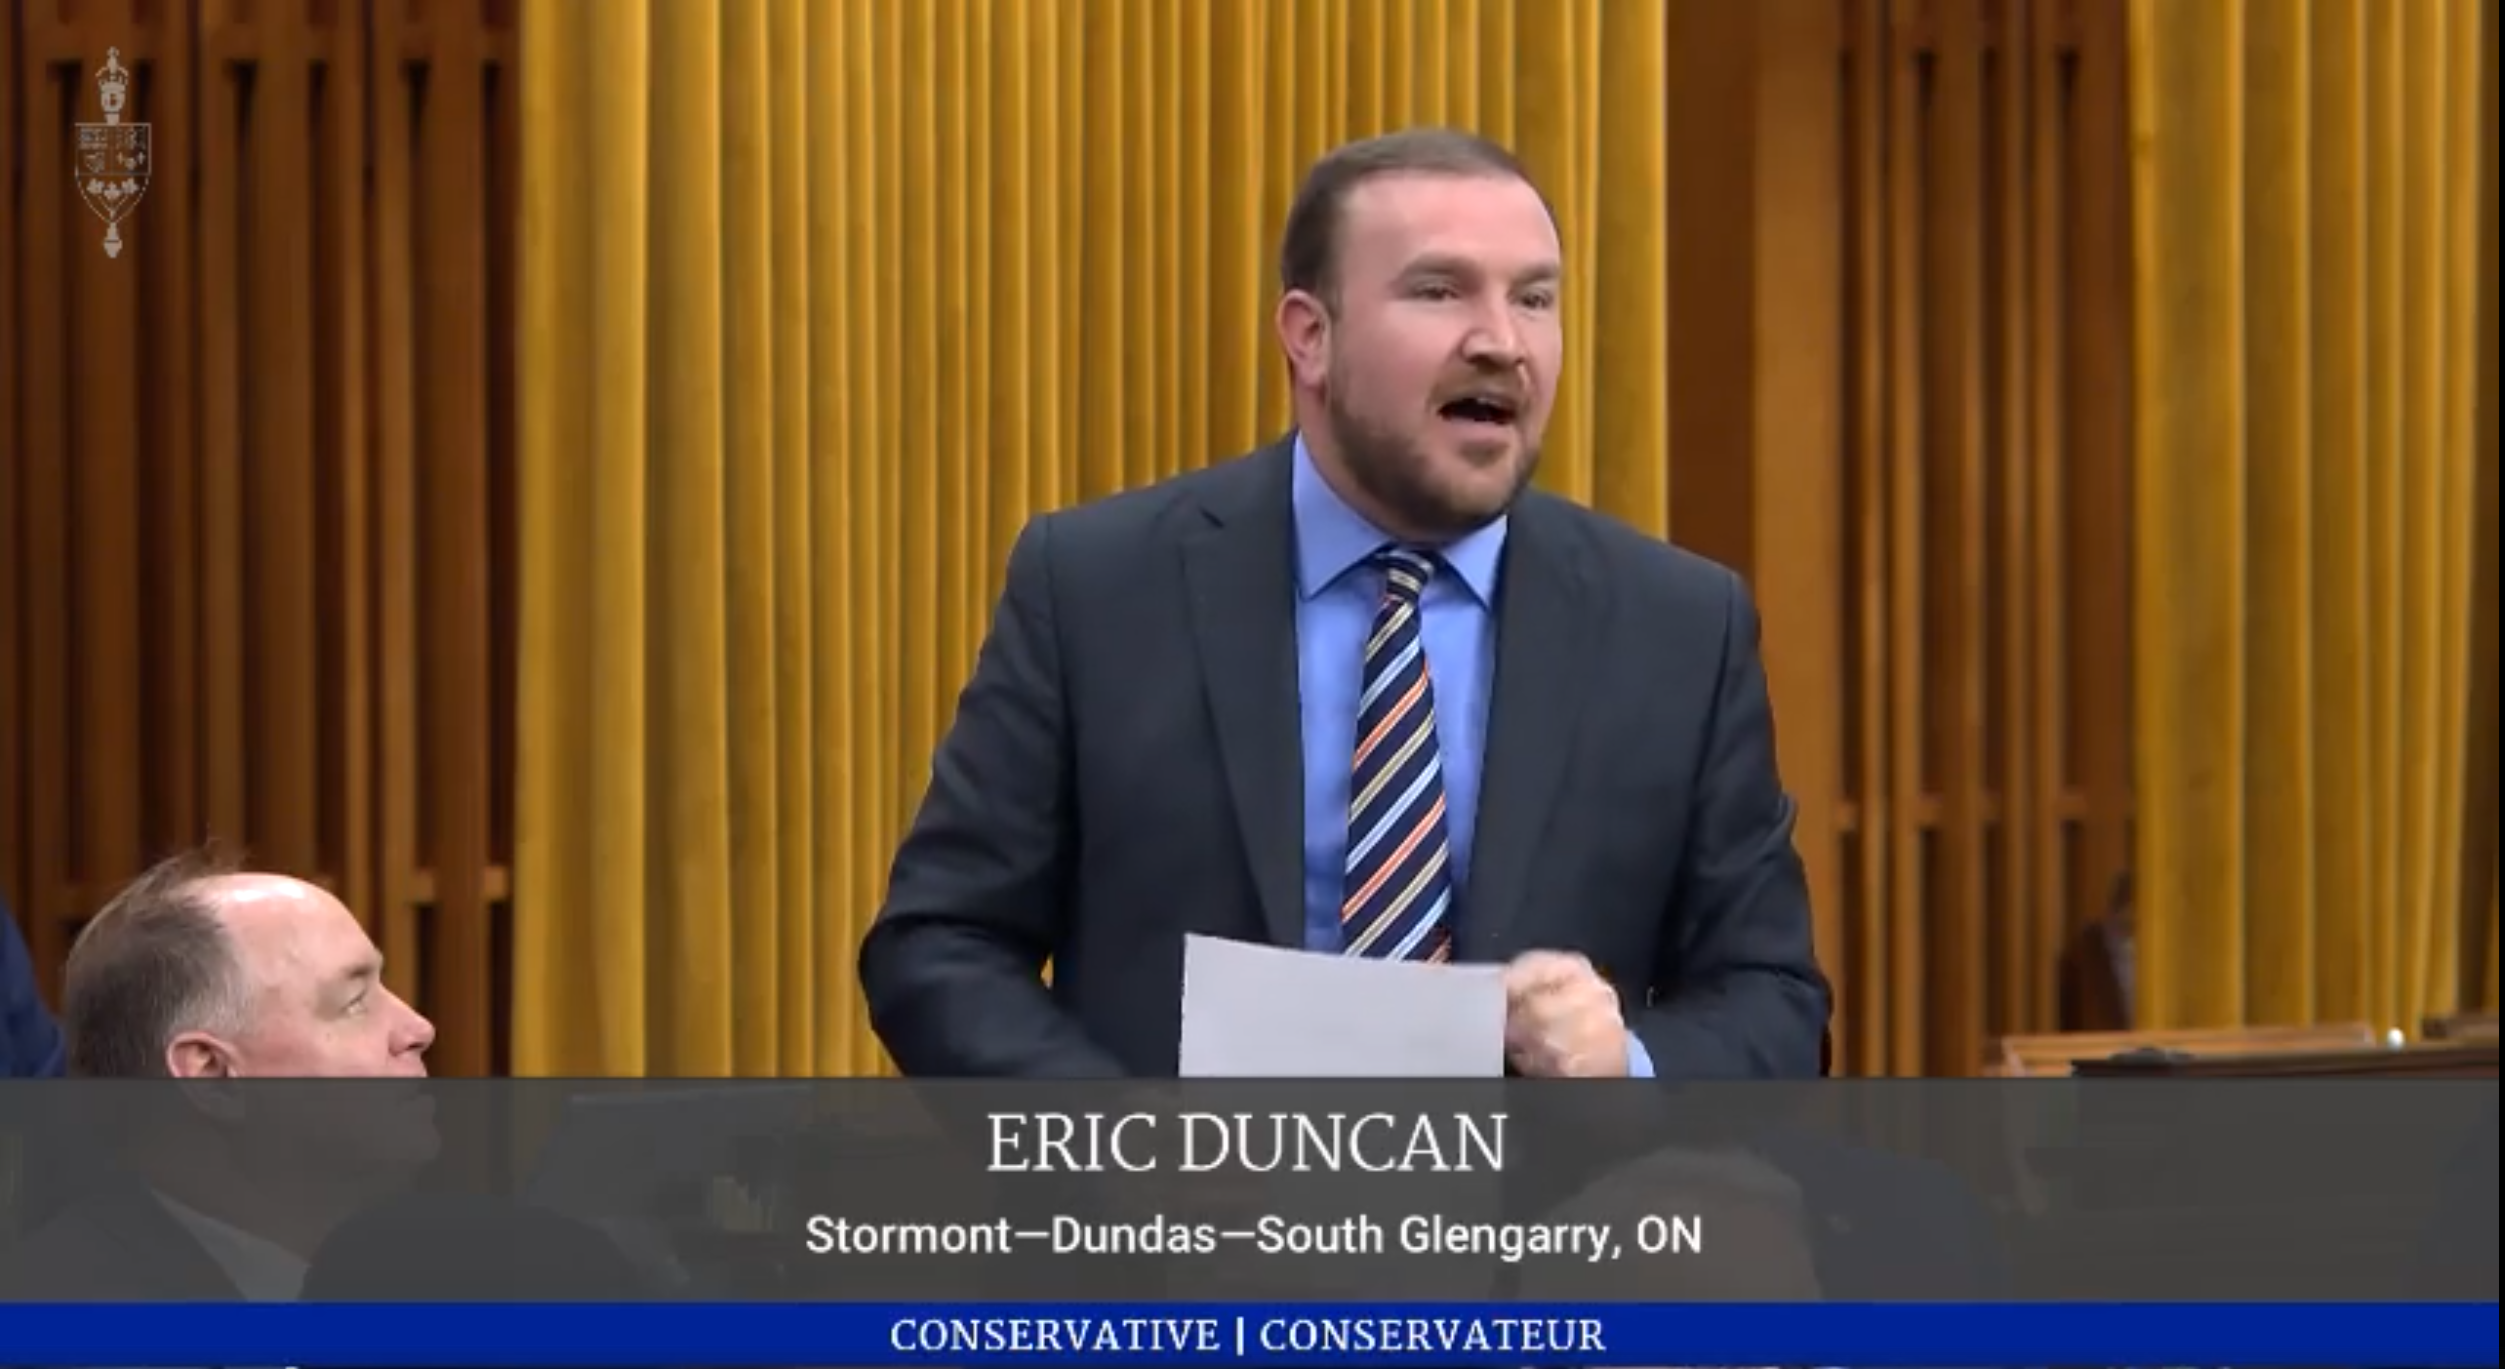 Meet Eric Duncan, MP - Eric Duncan, MP for Stormont-Dundas-South